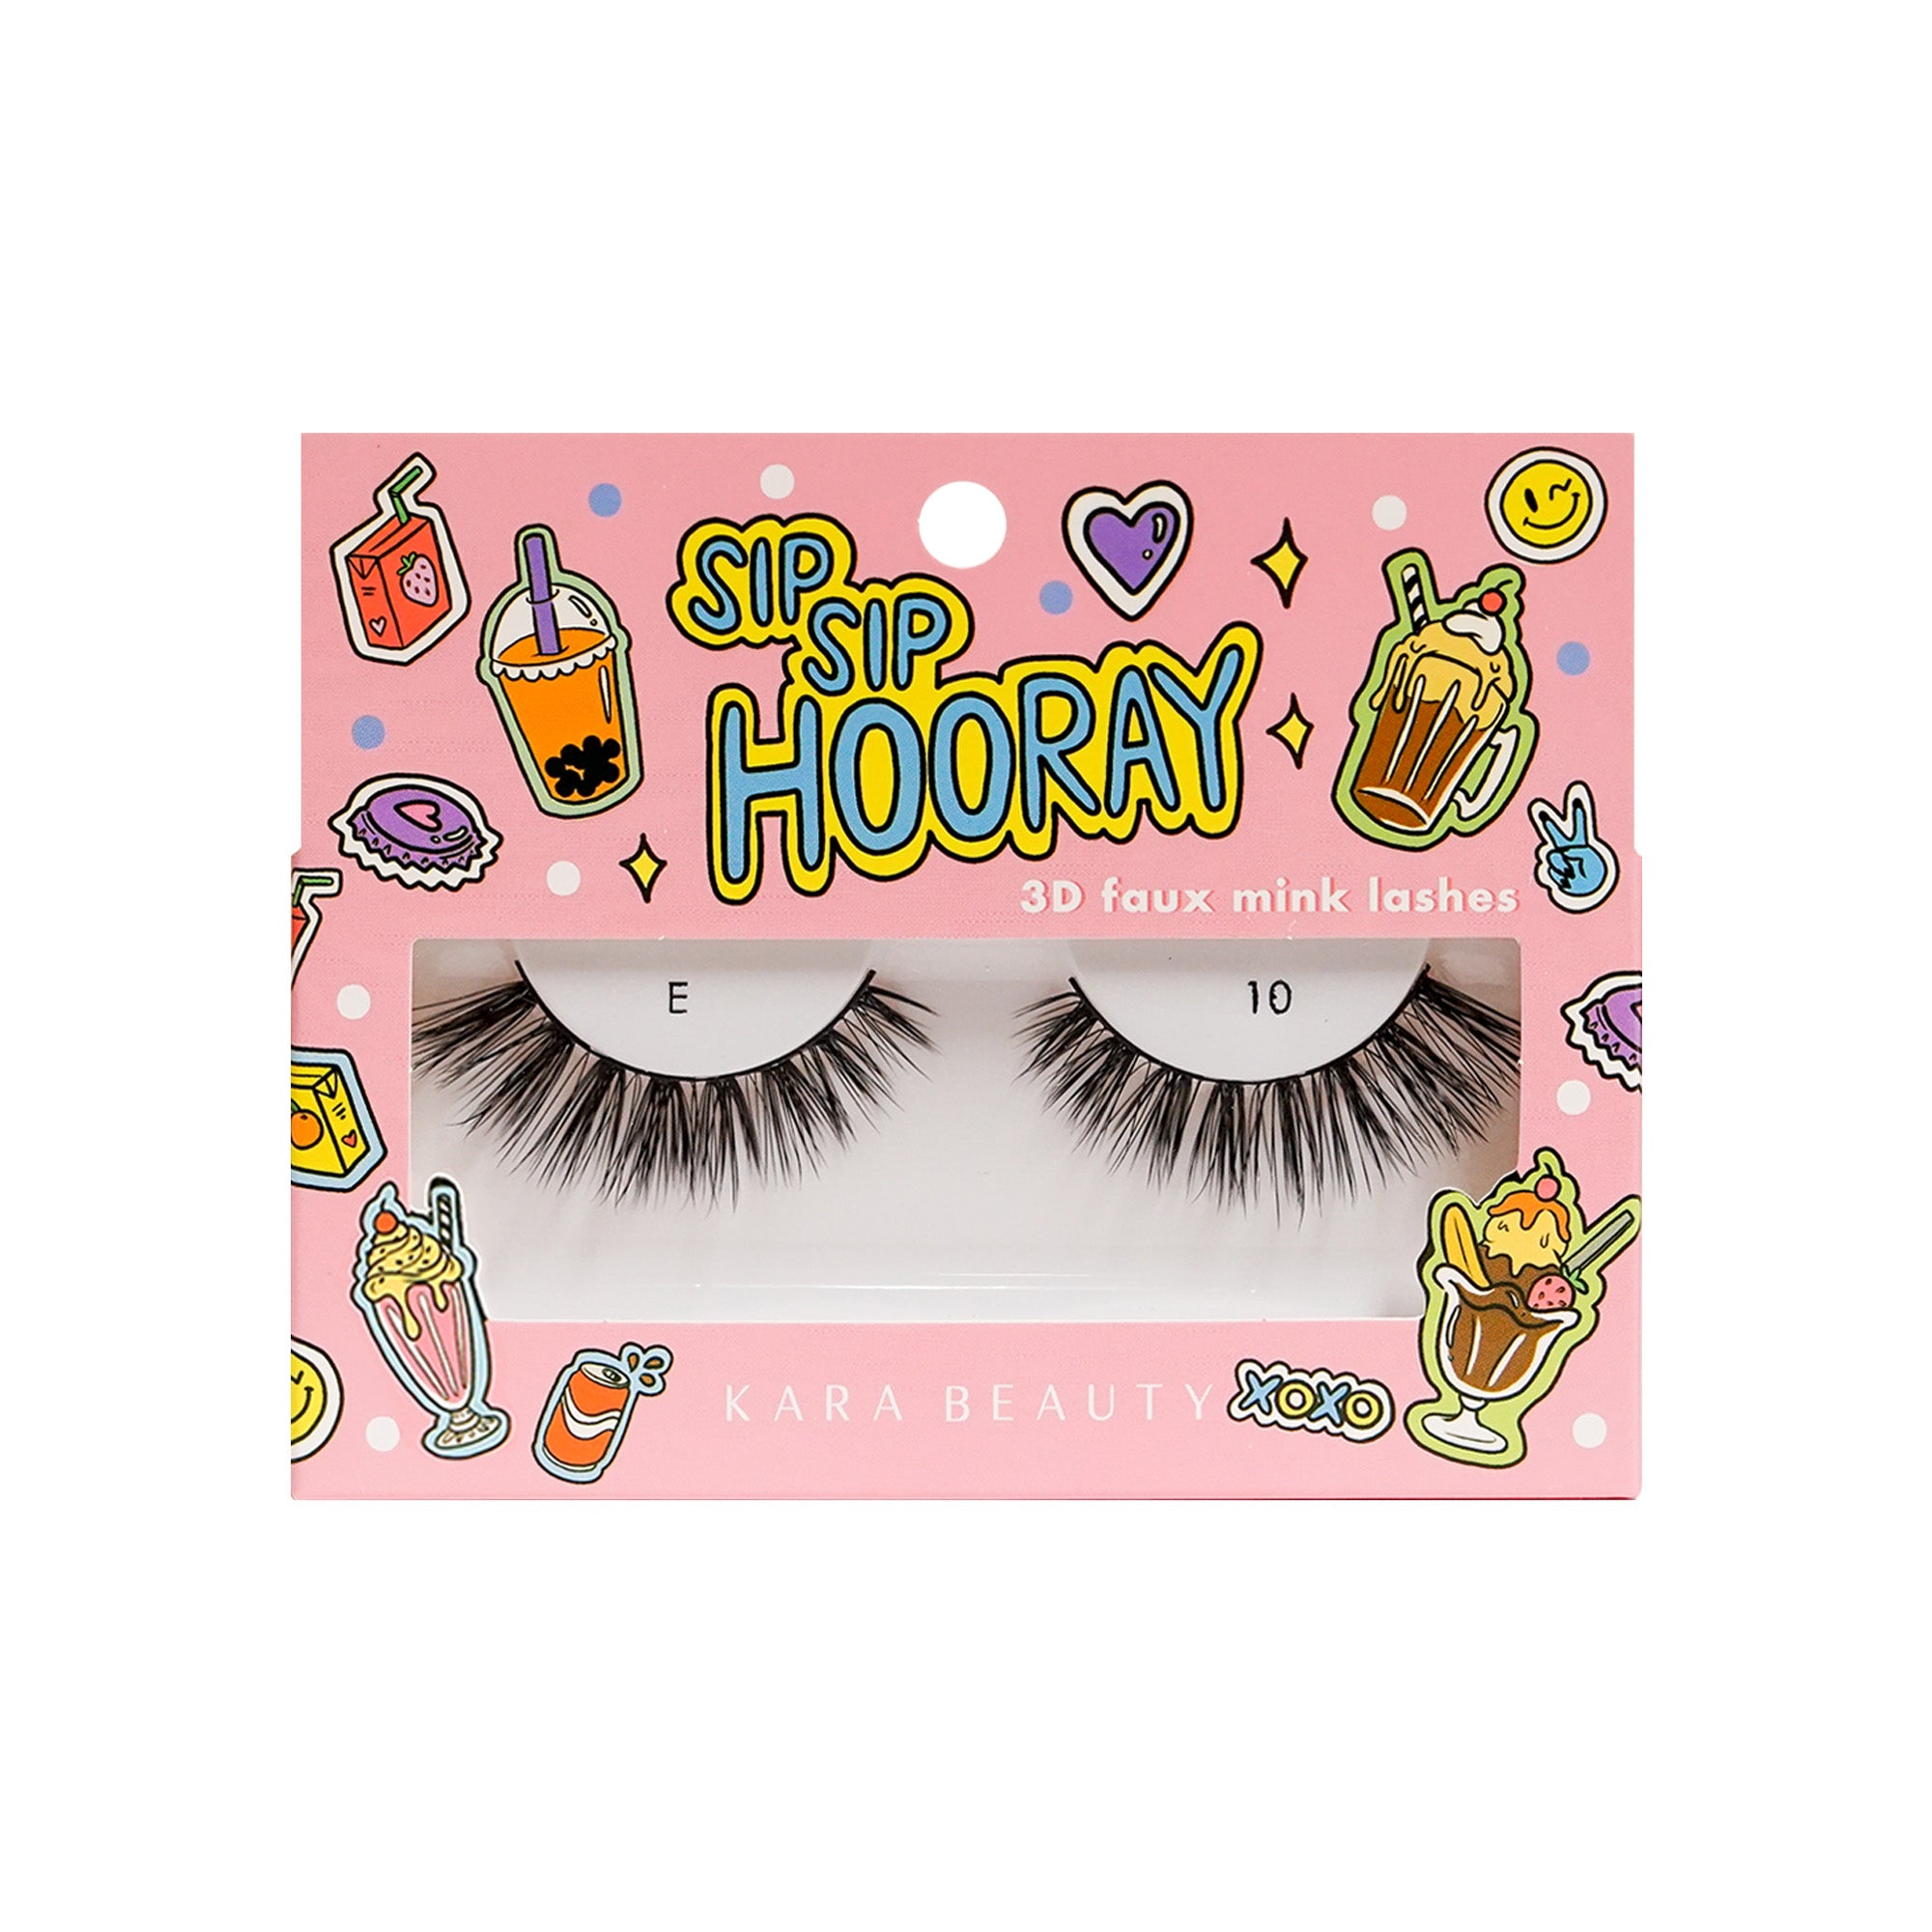 Kara Beauty's Sip Sip Hooray 3D Faux Mink - Synthetic Strip Eyelashes Style E10